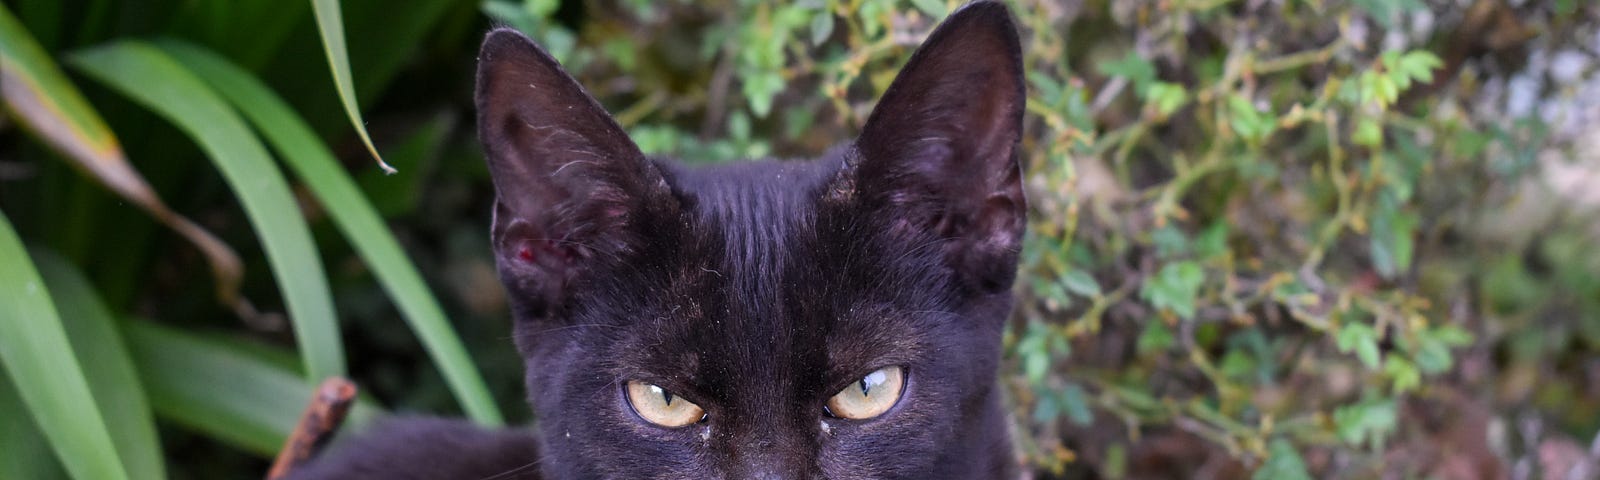 Black cat in the bushes